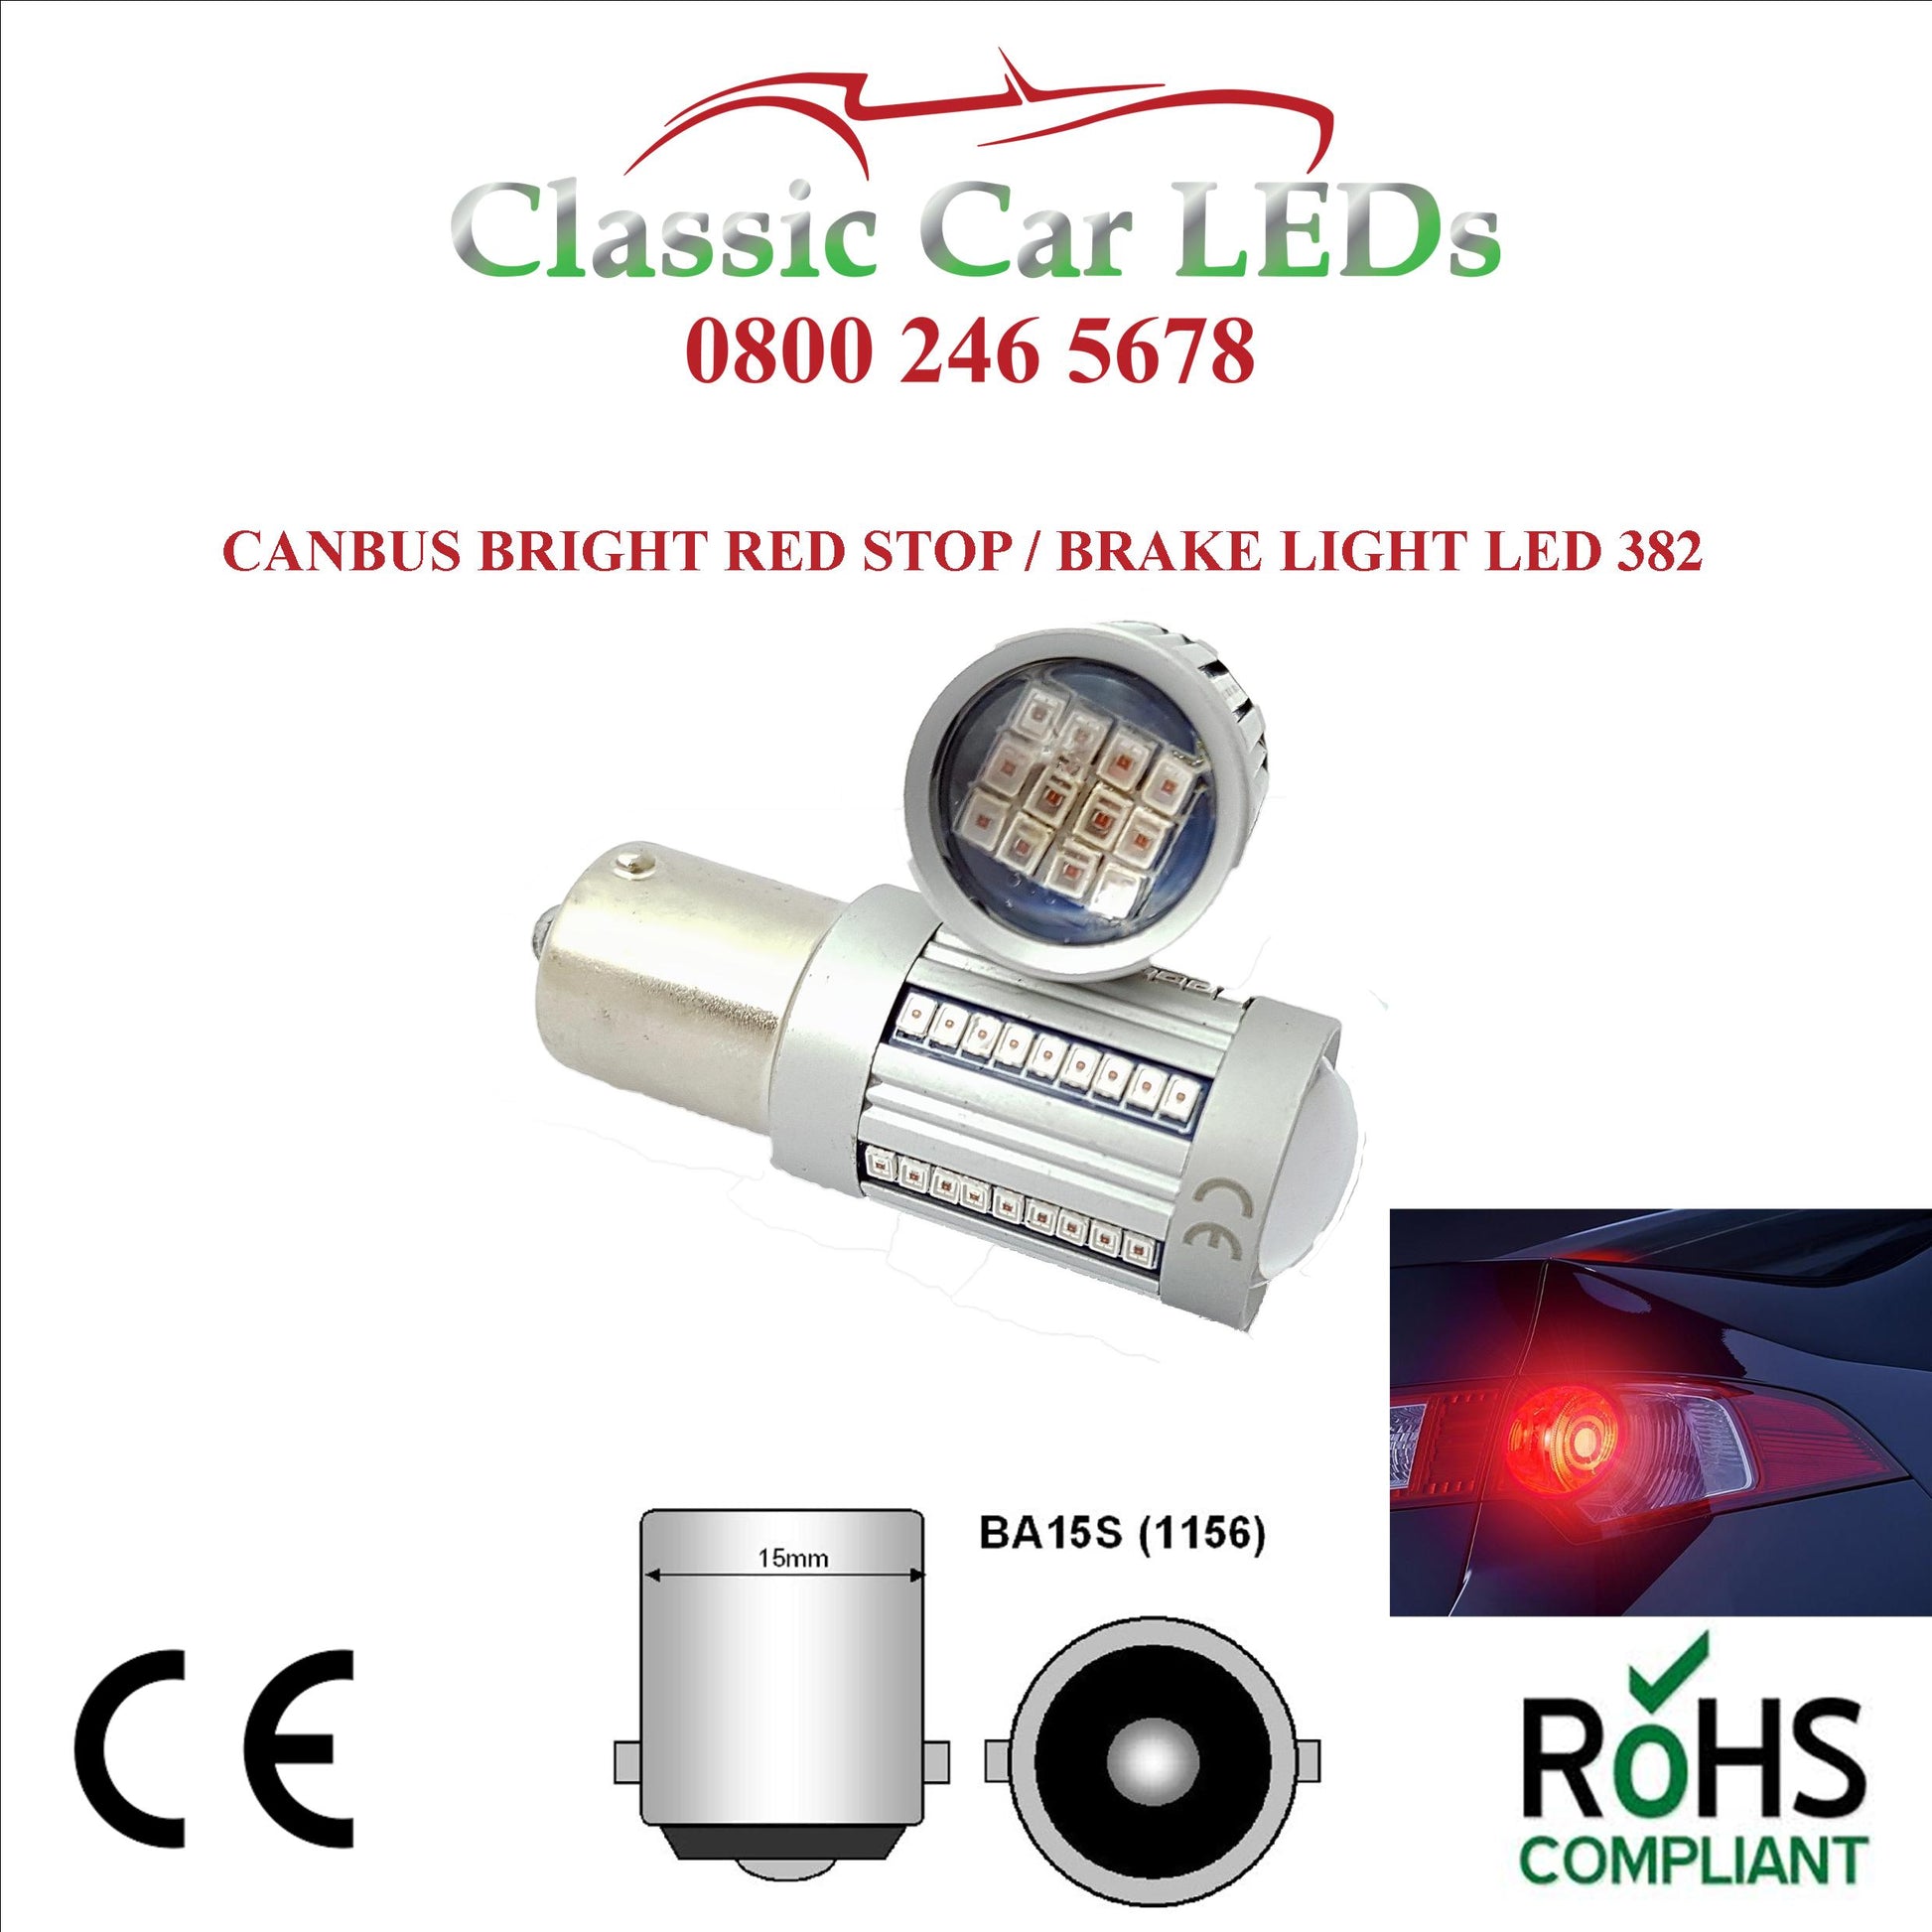 Strong Canbus Stop Brake Light Red LED 1156 P21W 382 – Classic Car LEDs Ltd